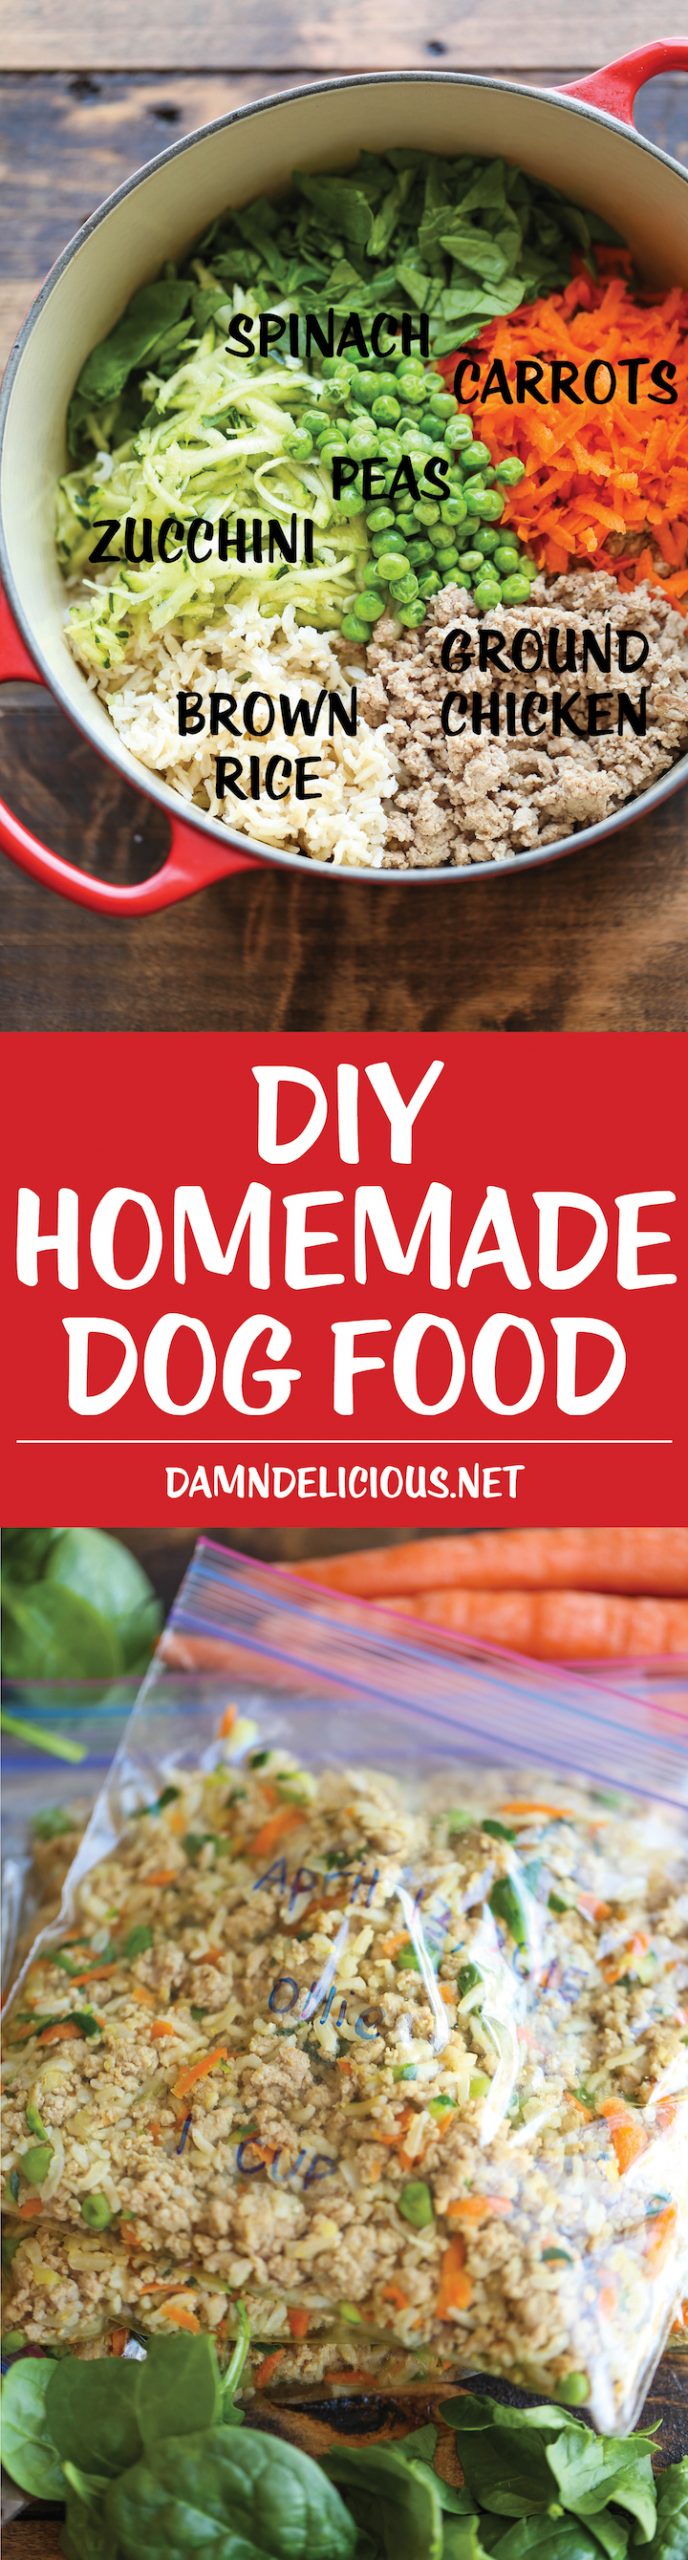 How to Make Dog Food